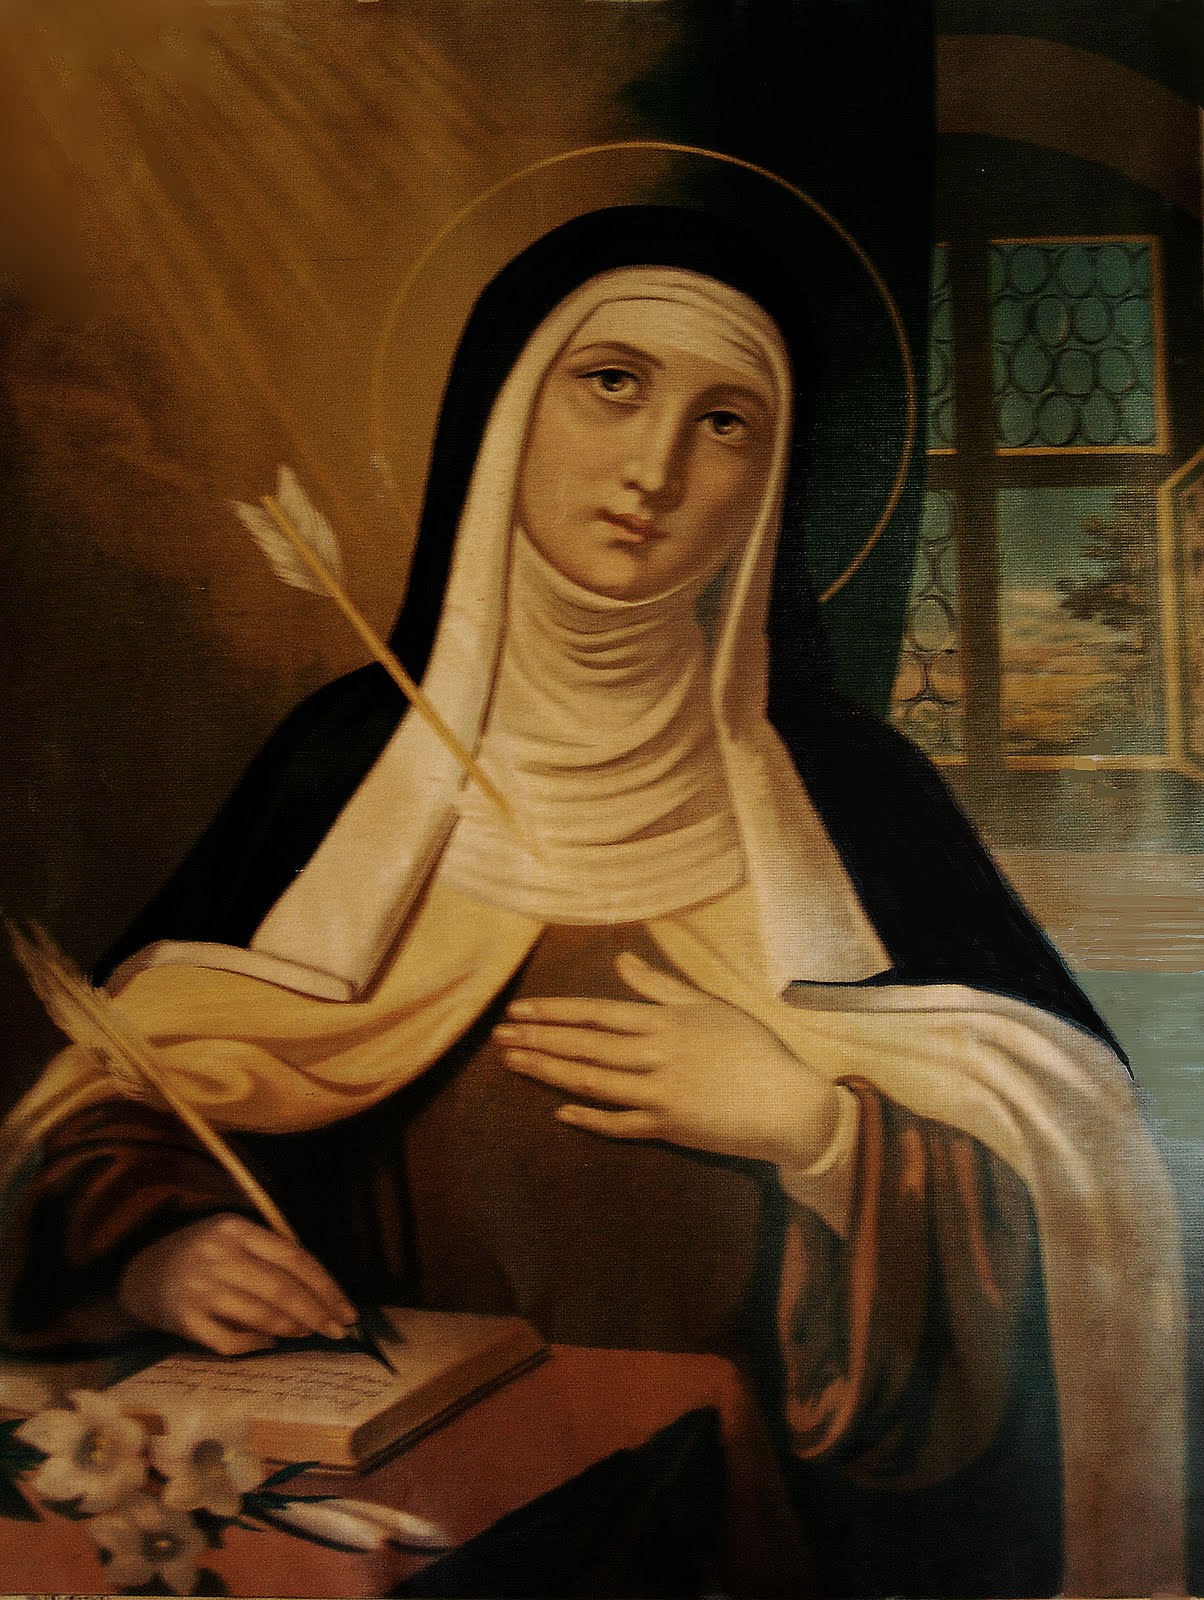 Day 7 - A Novena to St. Teresa of Avila - Discerning Hearts Podcast